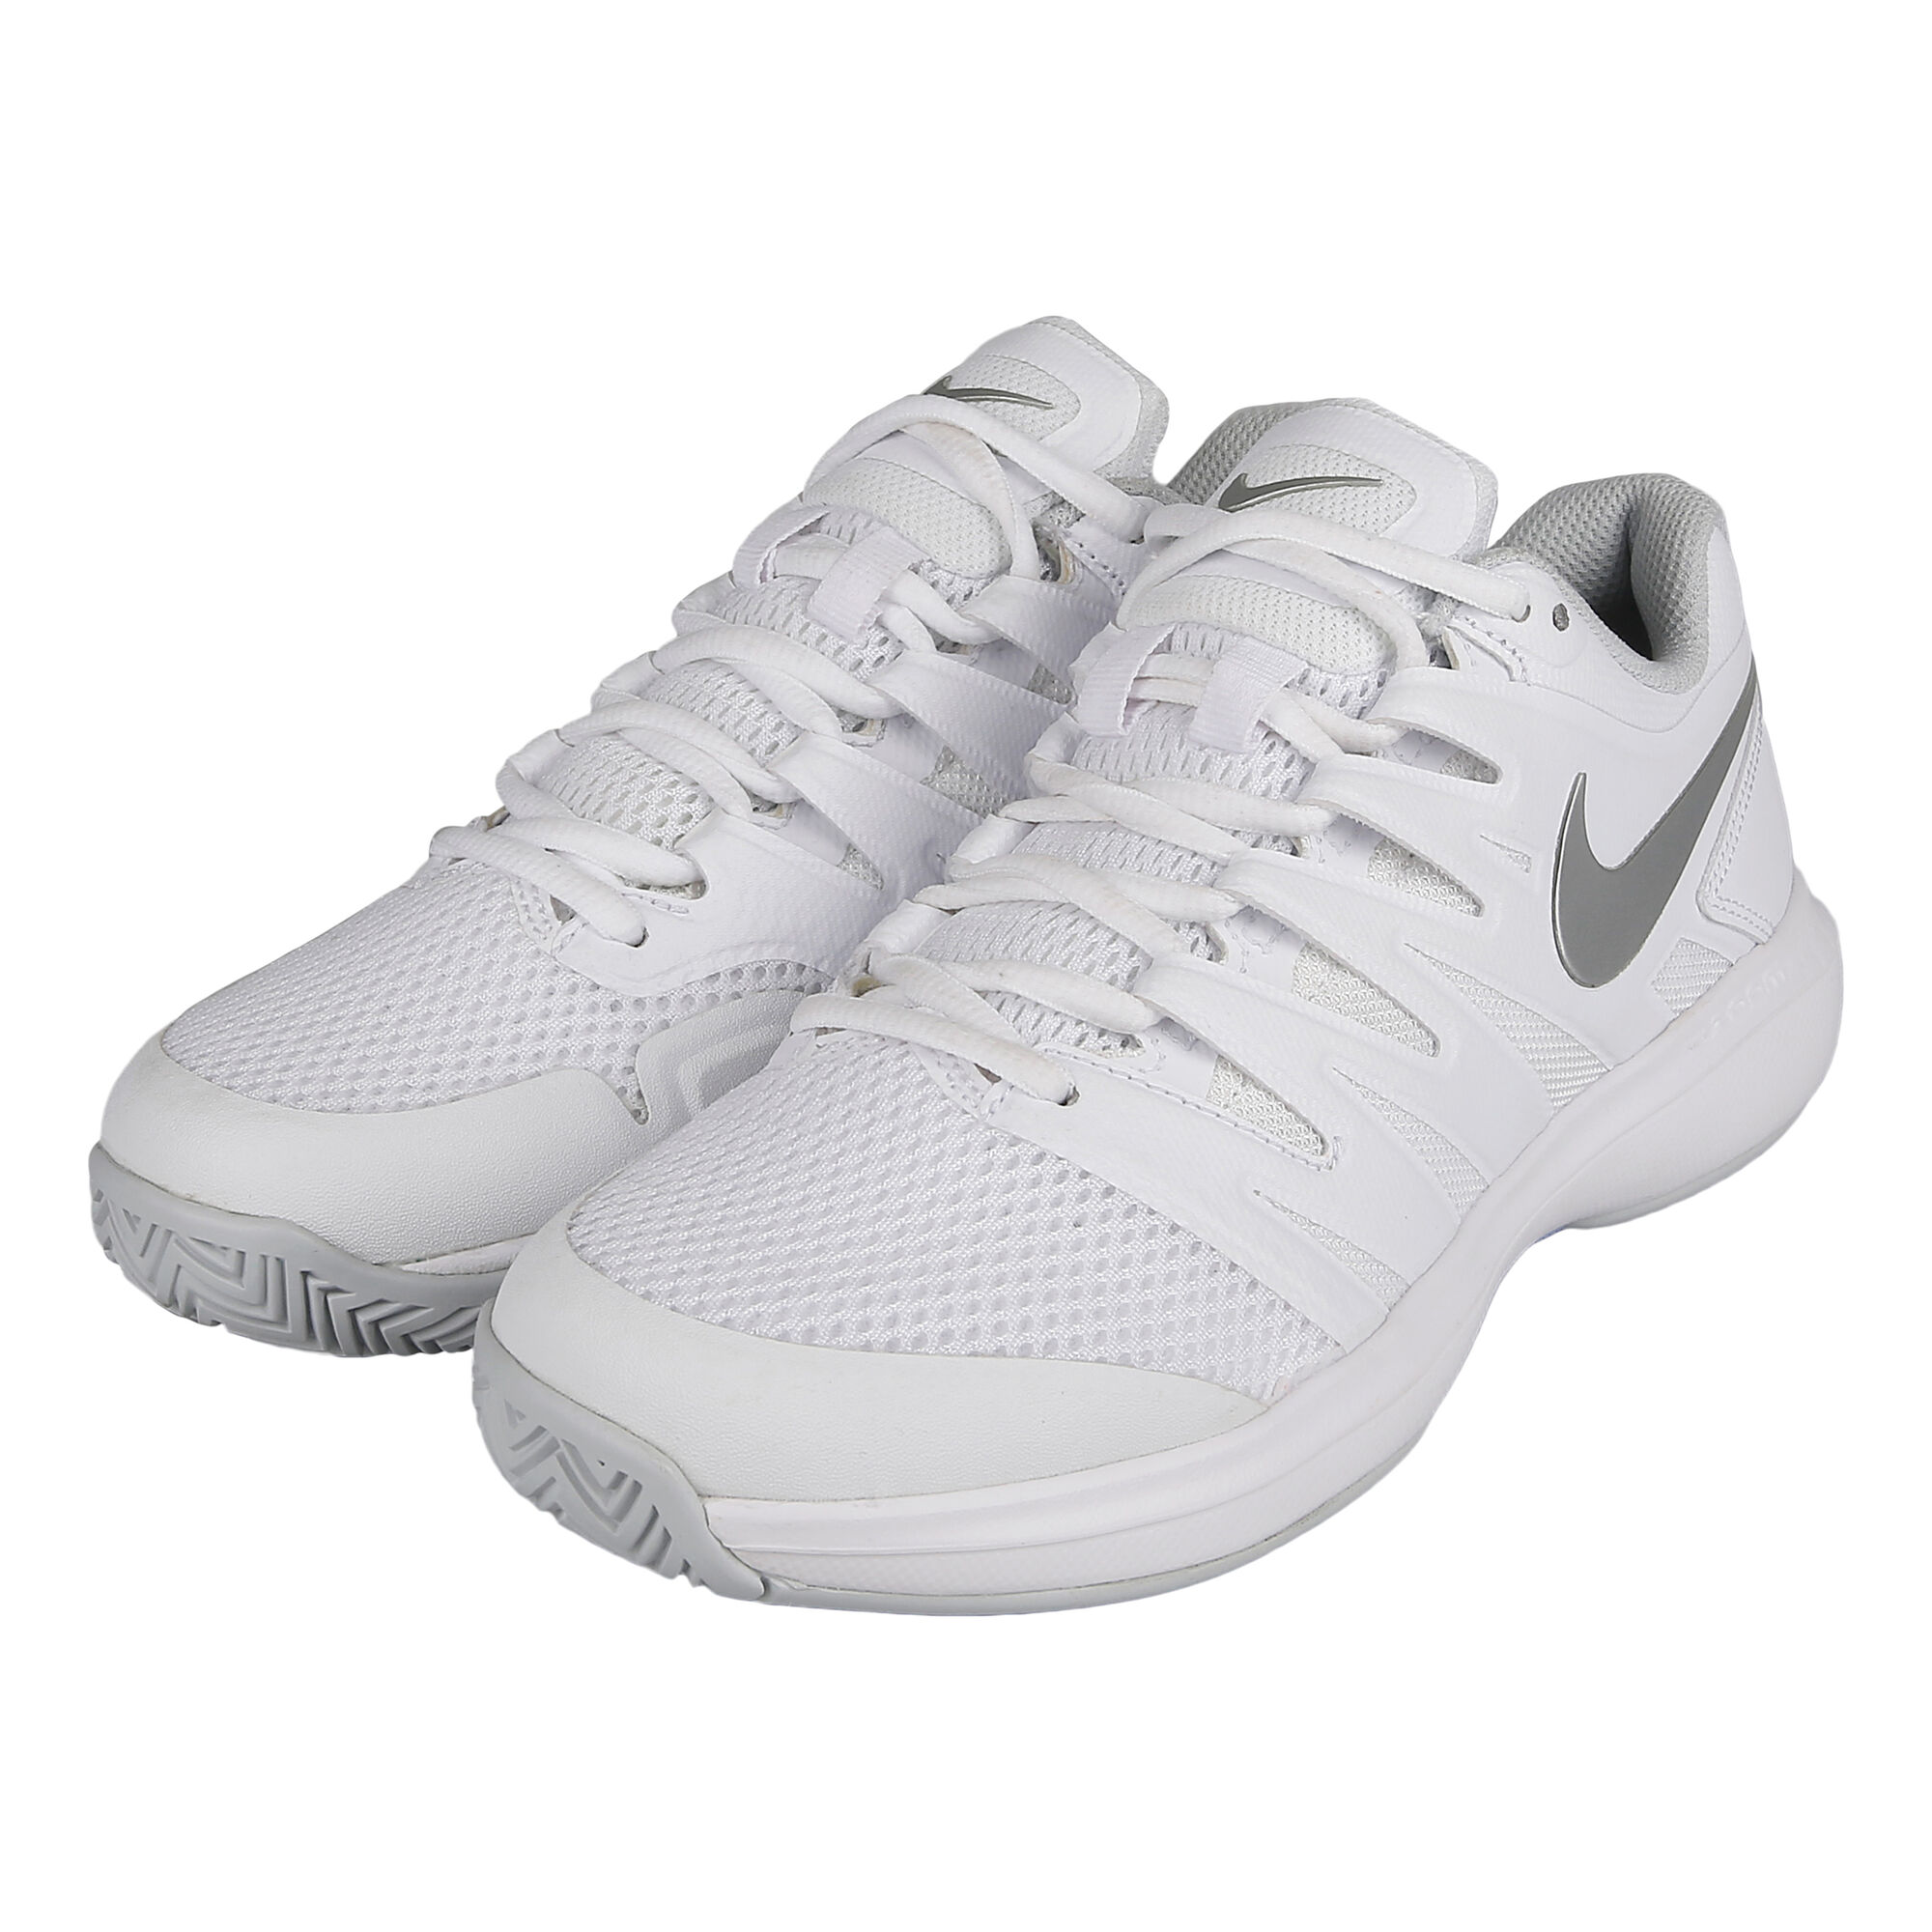 buy Nike Air Zoom Prestige All Court Shoe Women - White, Silver online ...